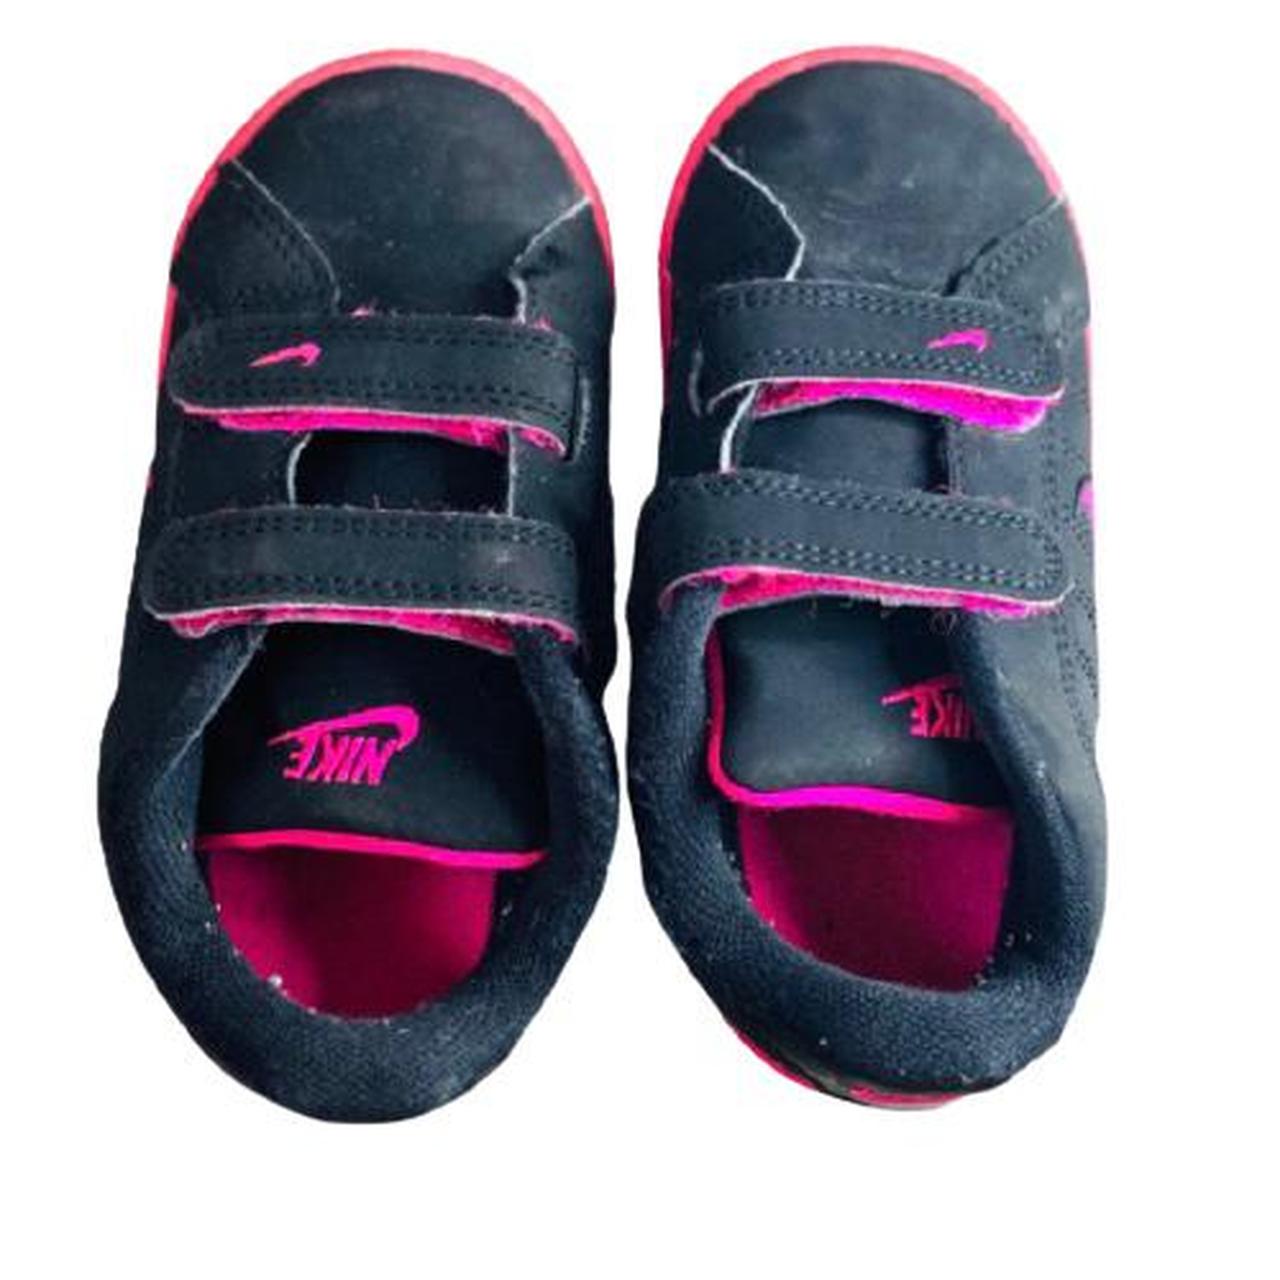 Product Image 1 - Girls Nike Velcro sneakers

Good used